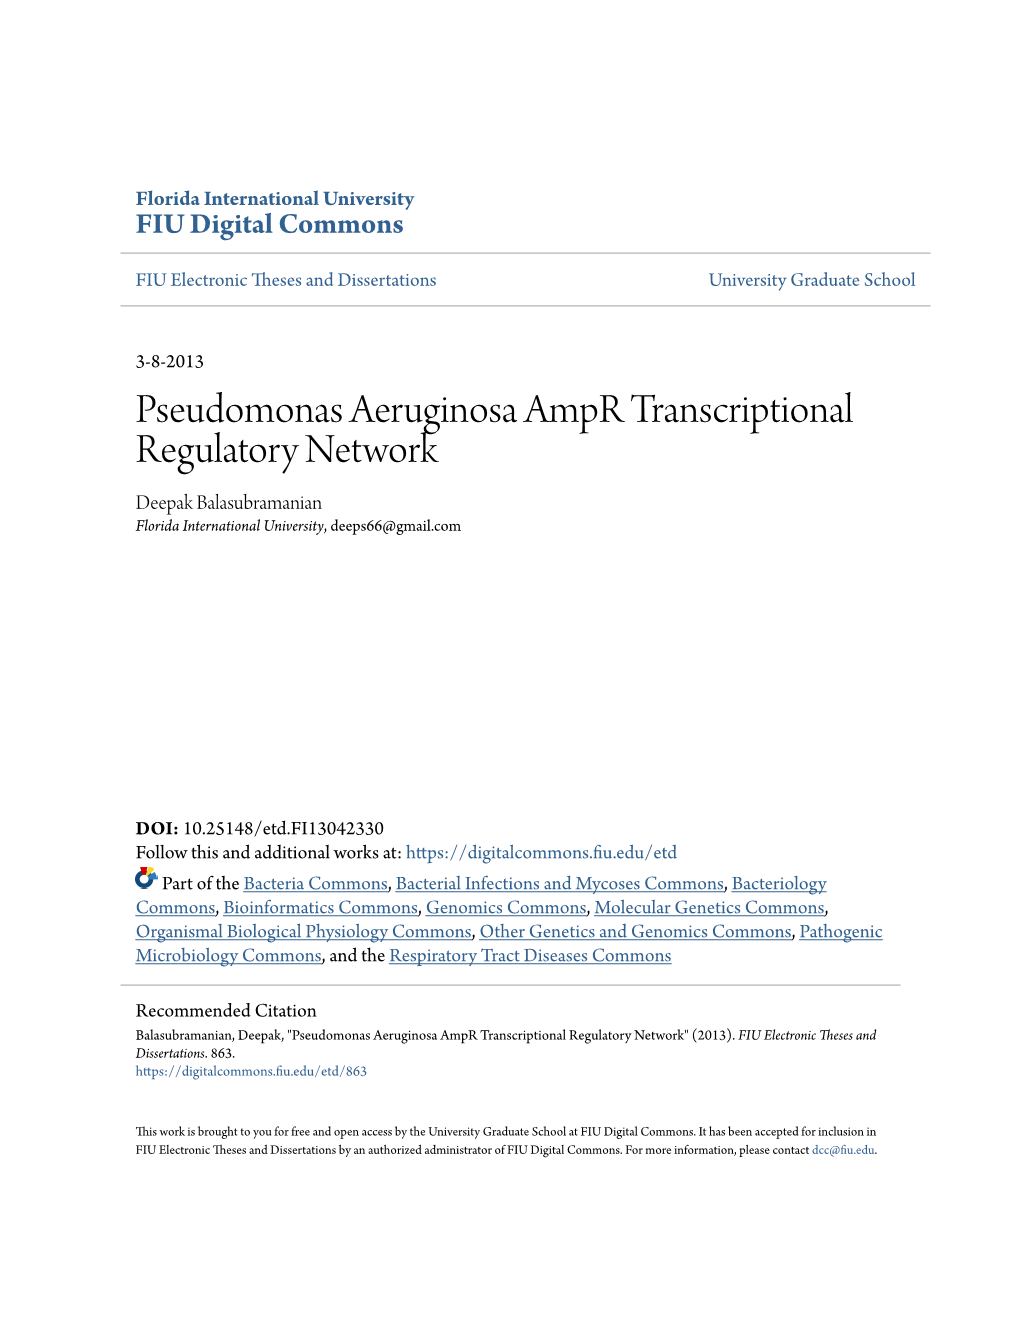 Pseudomonas Aeruginosa Ampr Transcriptional Regulatory Network Deepak Balasubramanian Florida International University, Deeps66@Gmail.Com